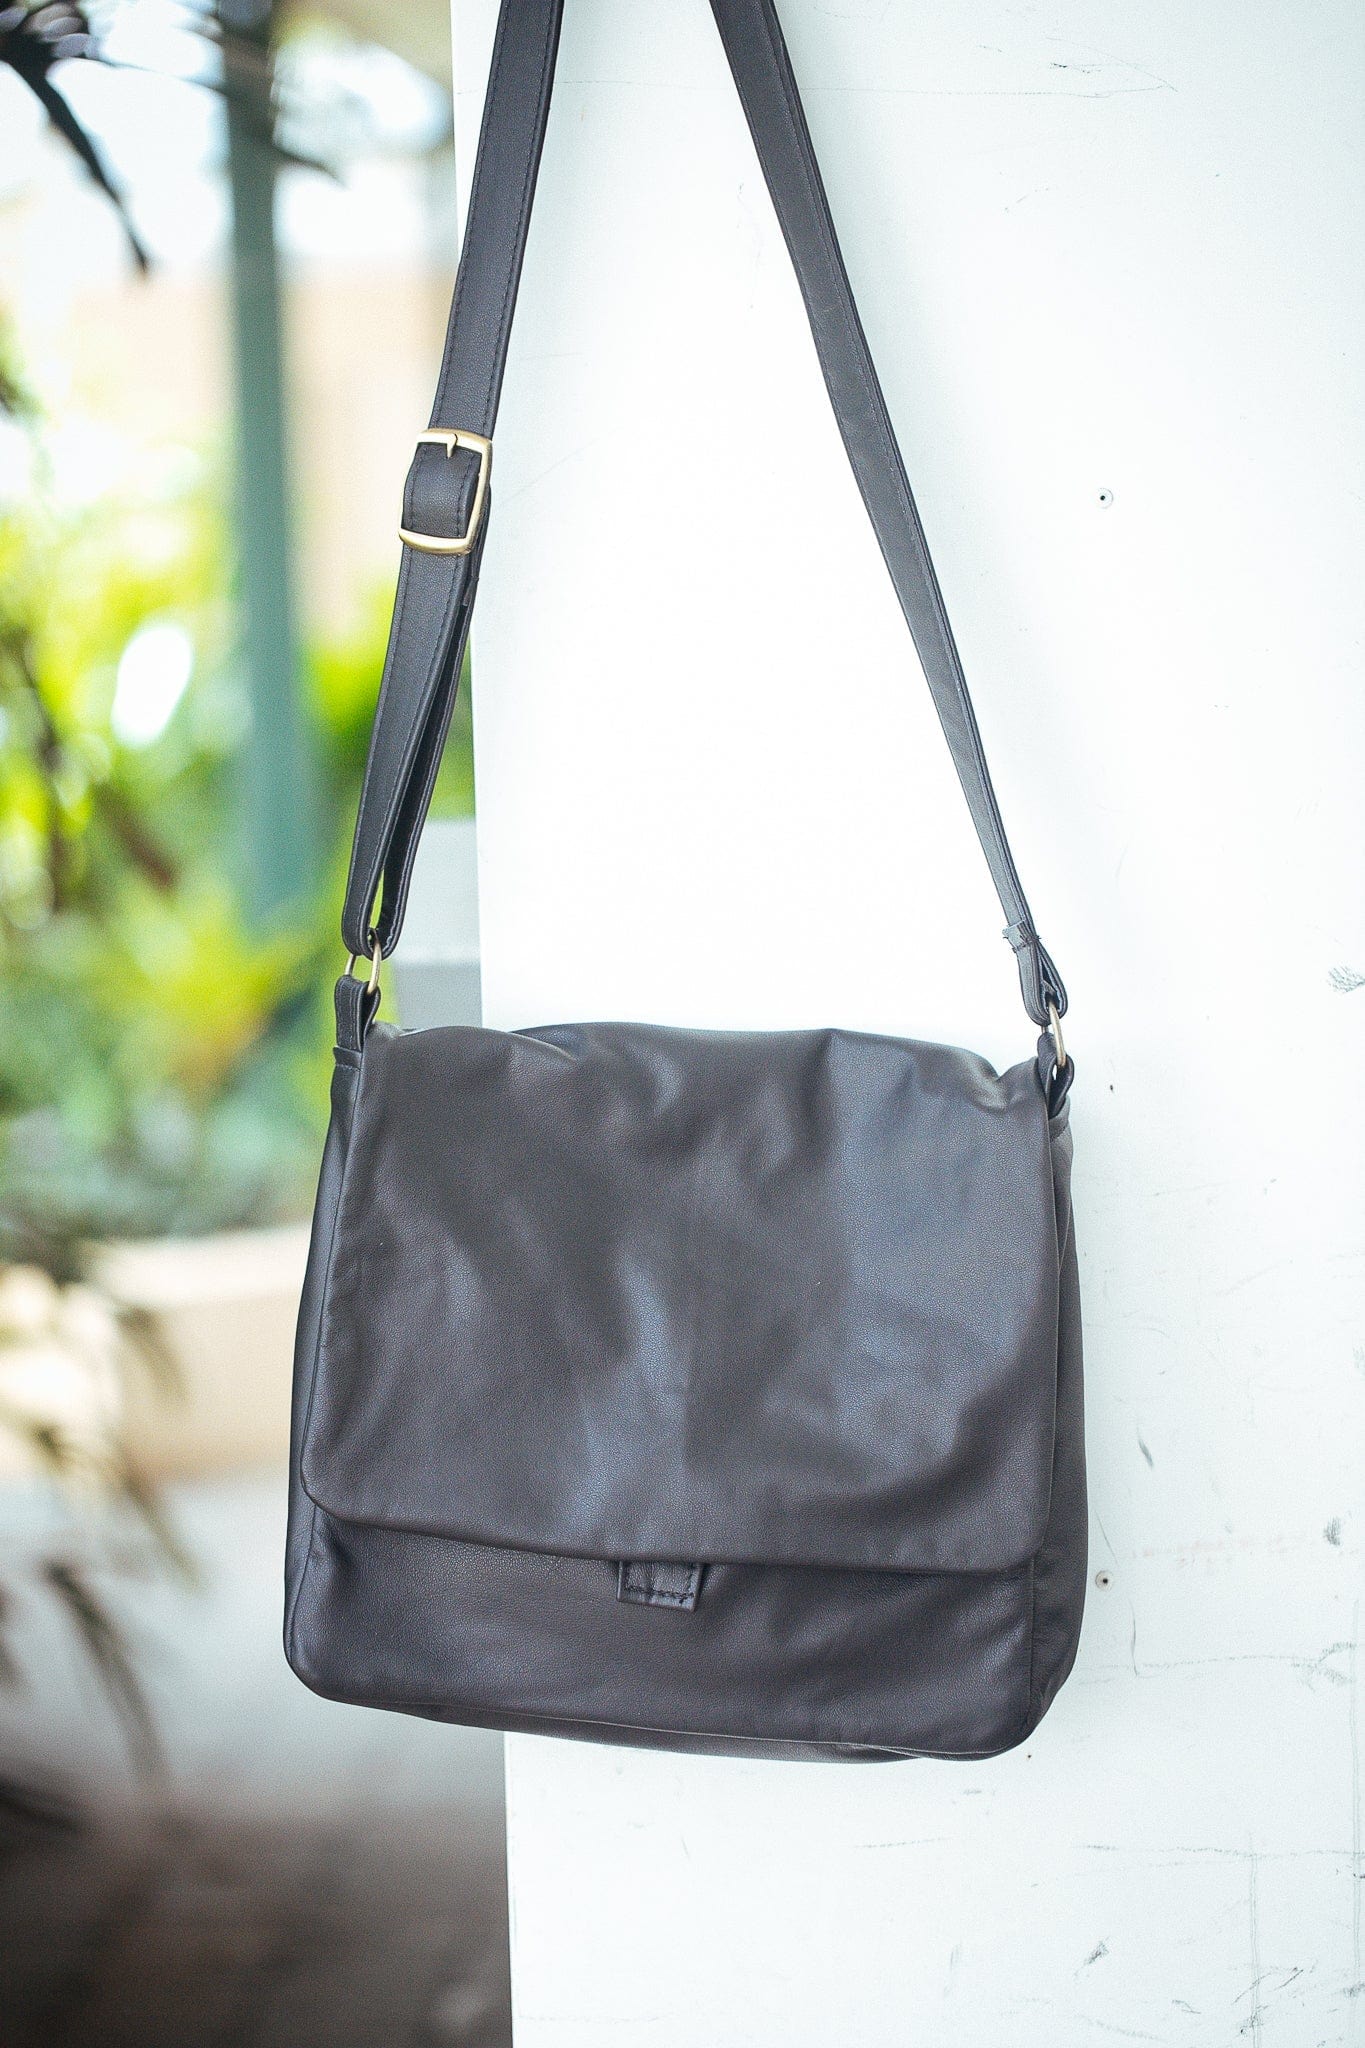 The Real McCaul Shoulder Bags Black Universal Satchel Bag - Medium - Cowhide Australian Made Australian Owned Leather Satchel Bag- Australian Made in Kangaroo and Cowhide Leather